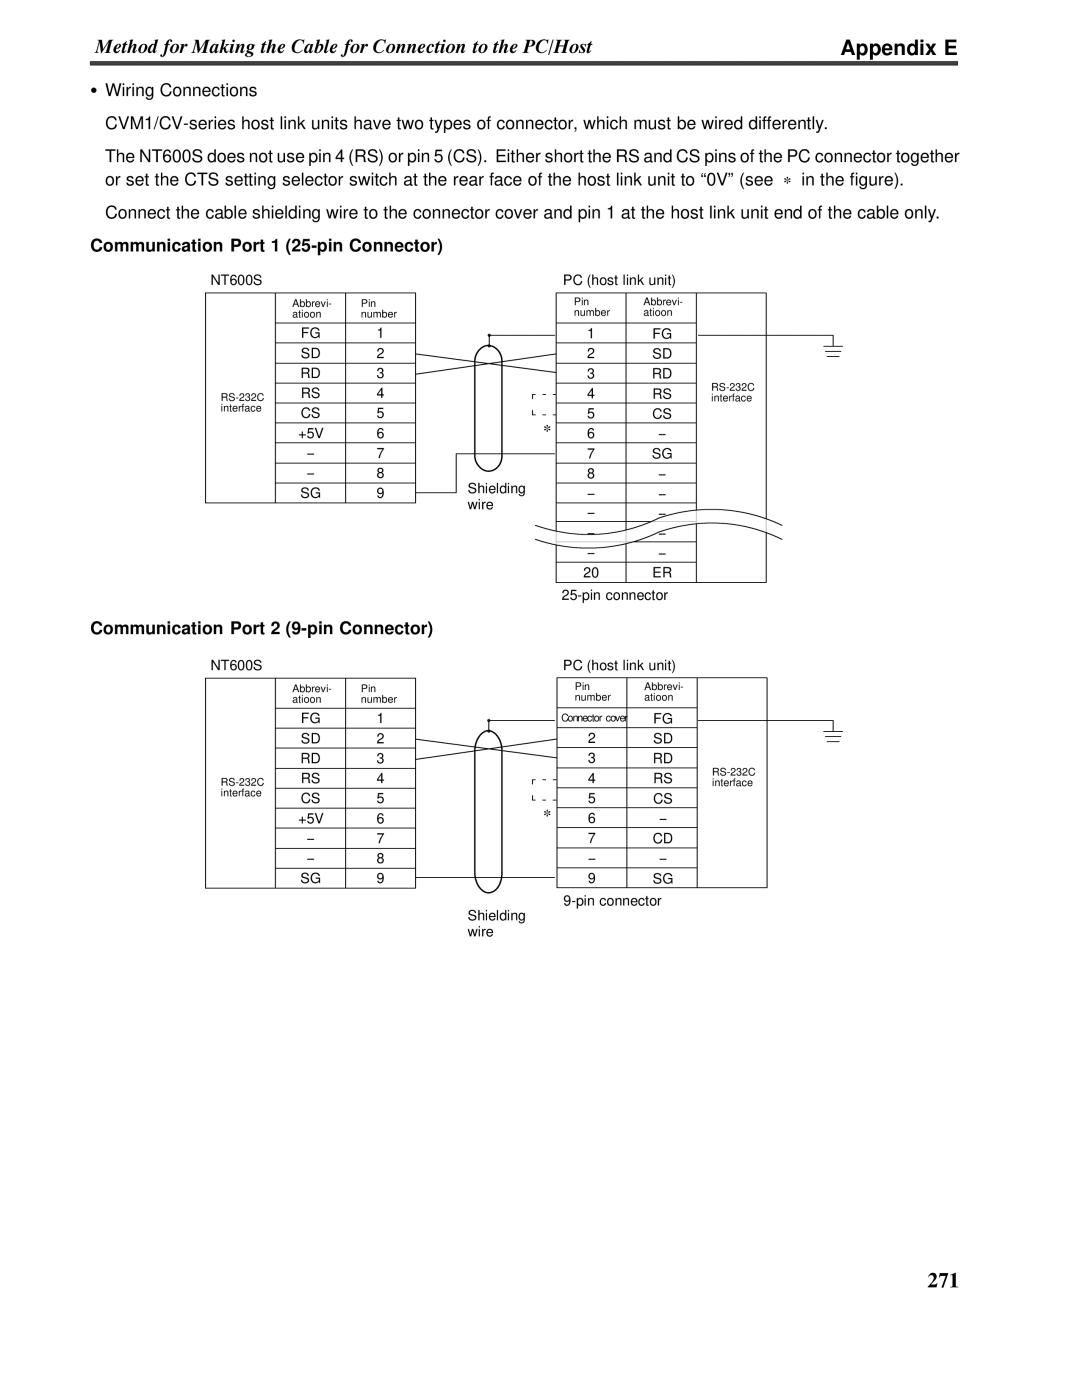 Omron V022-E3-1 Appendix E, Wiring Connections, Communication Port 1 25-pinConnector, Communication Port 2 9-pinConnector 